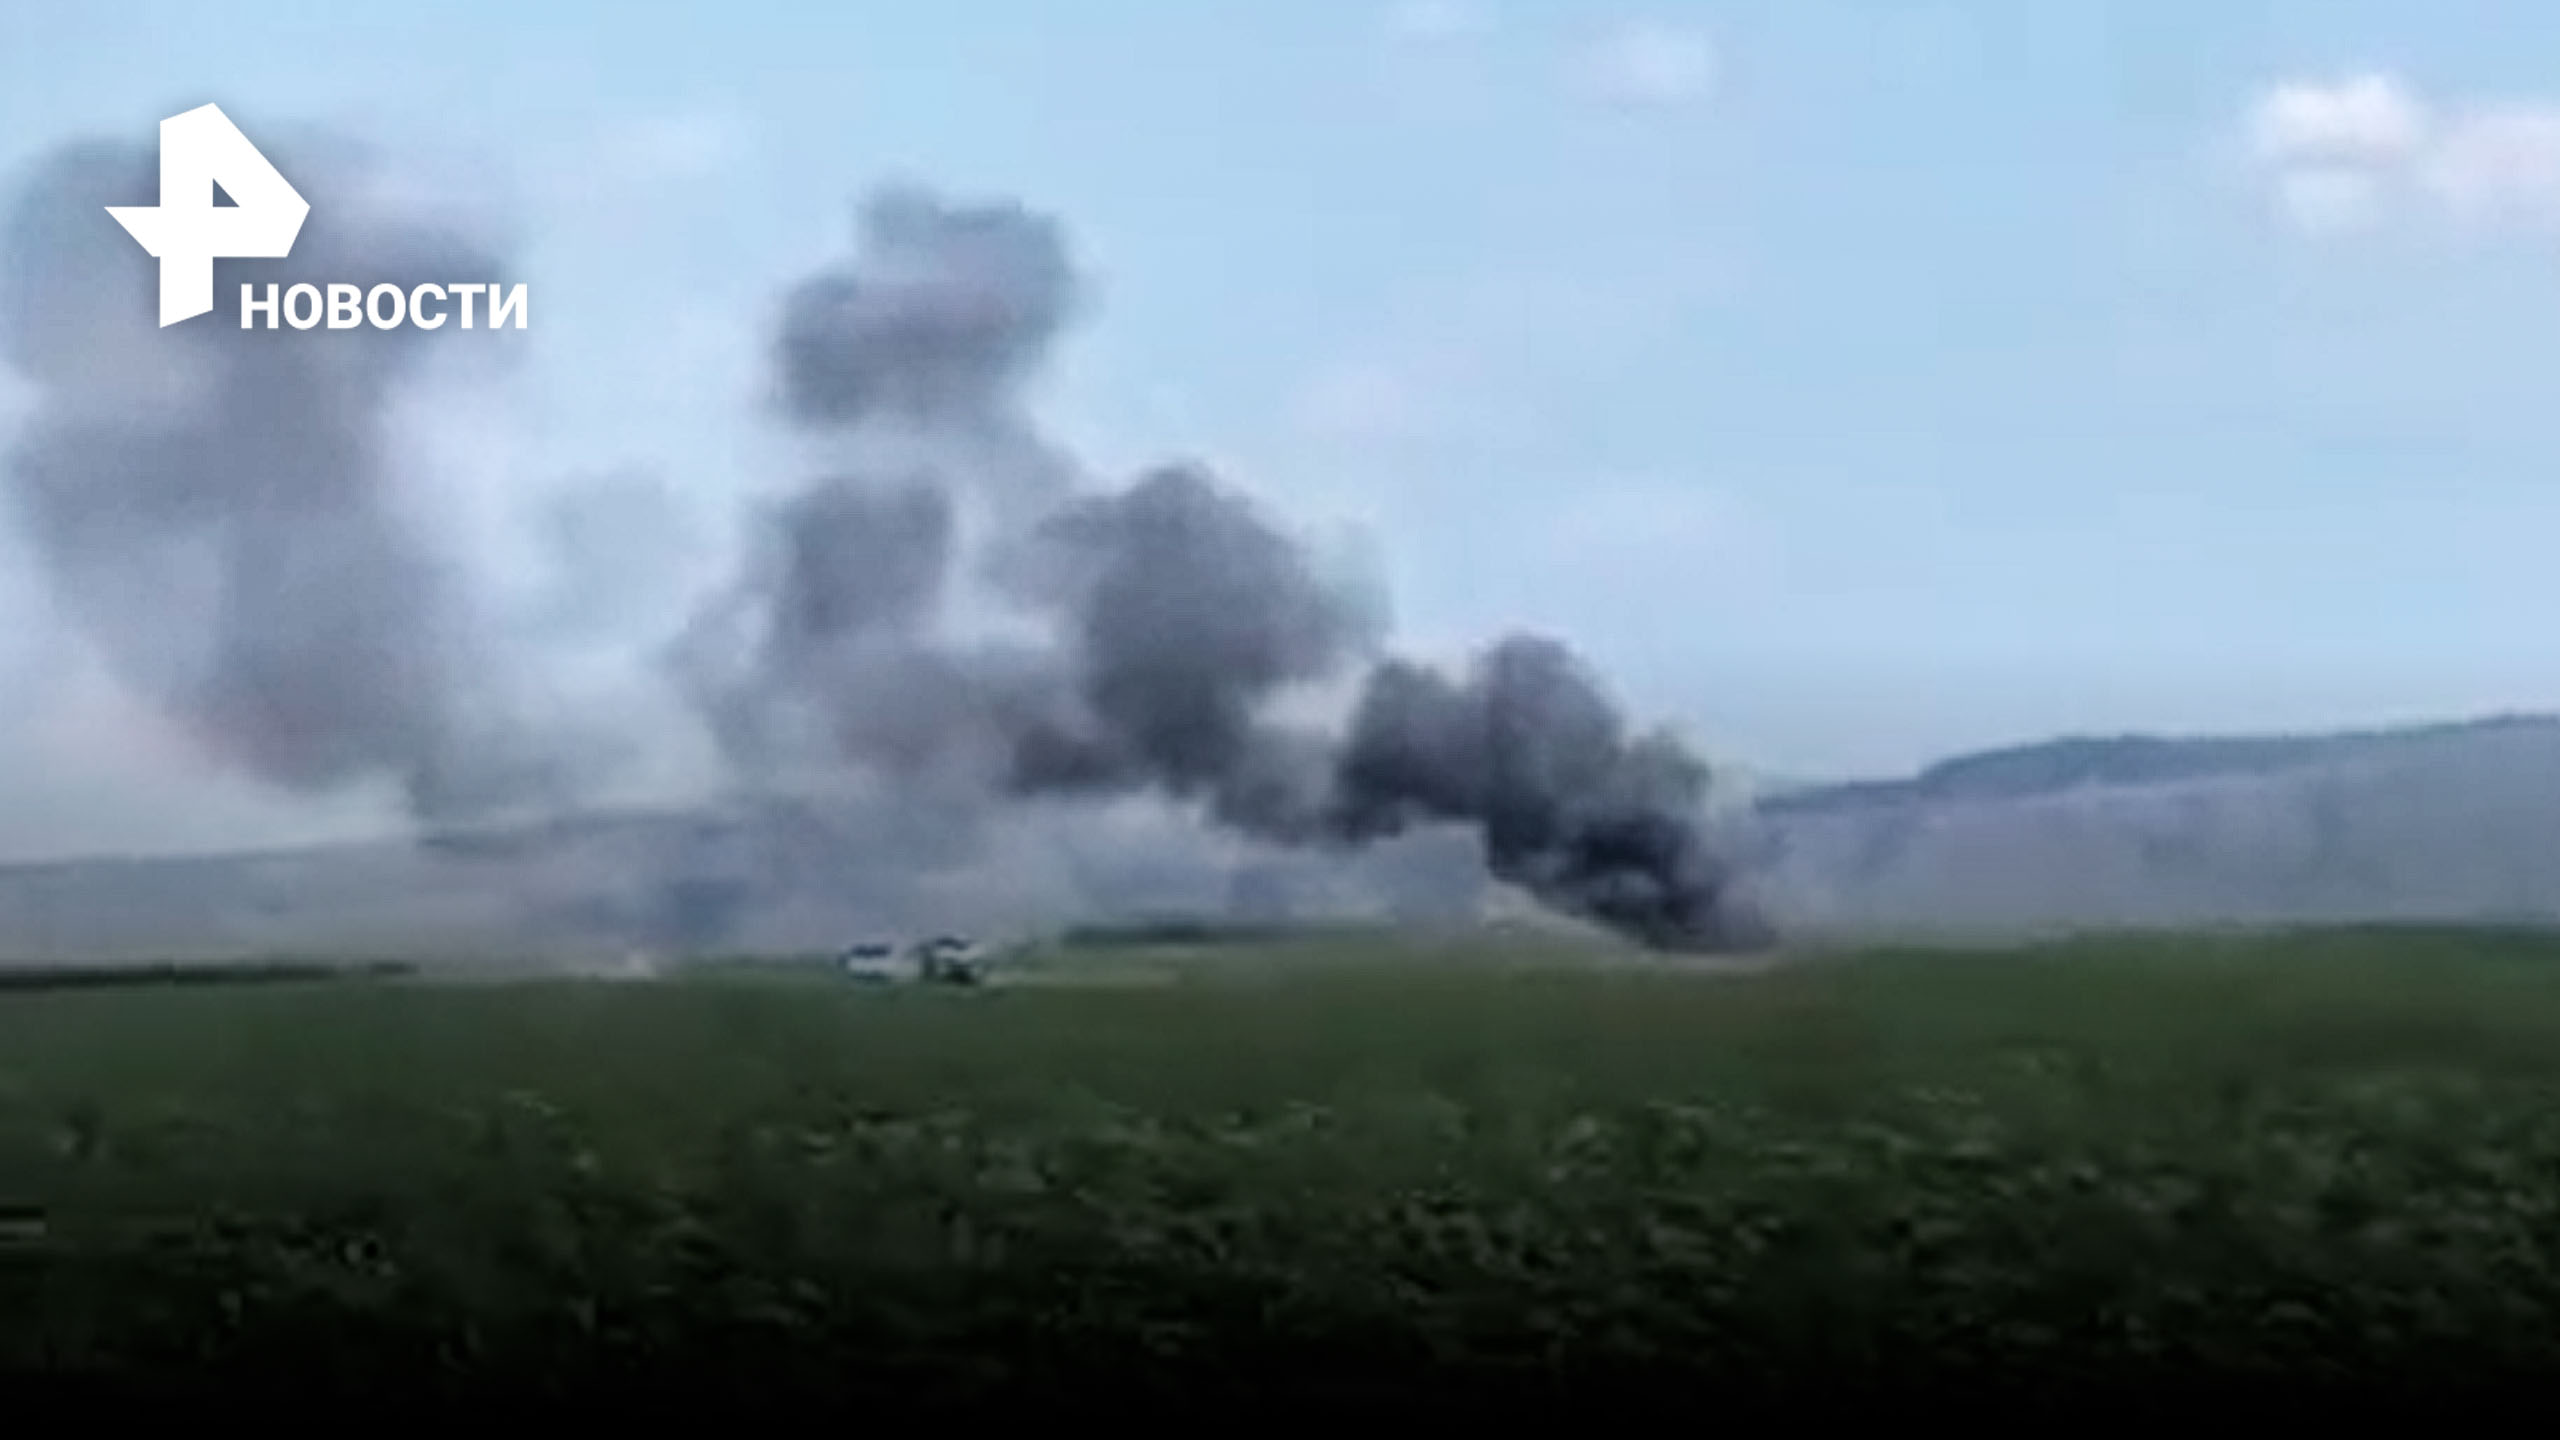 Тяжелый дрон НАТО MQ-9 Reaper рухнул и загорелся в полях Румынии / РЕН Новости